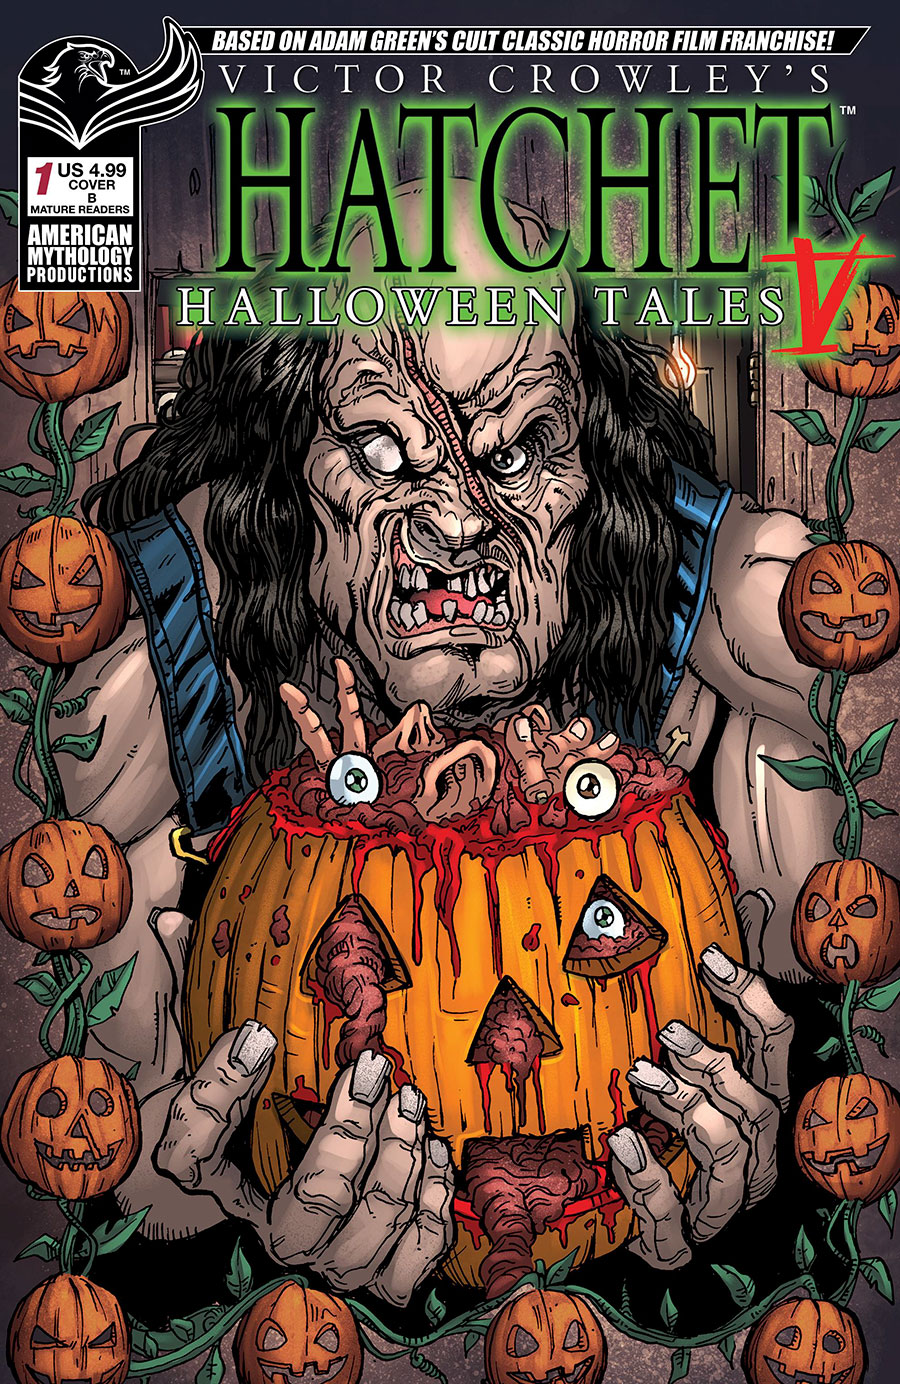 Victor Crowleys Hatchet Halloween Tales V #1 Cover B Variant Puis Calzada Cover